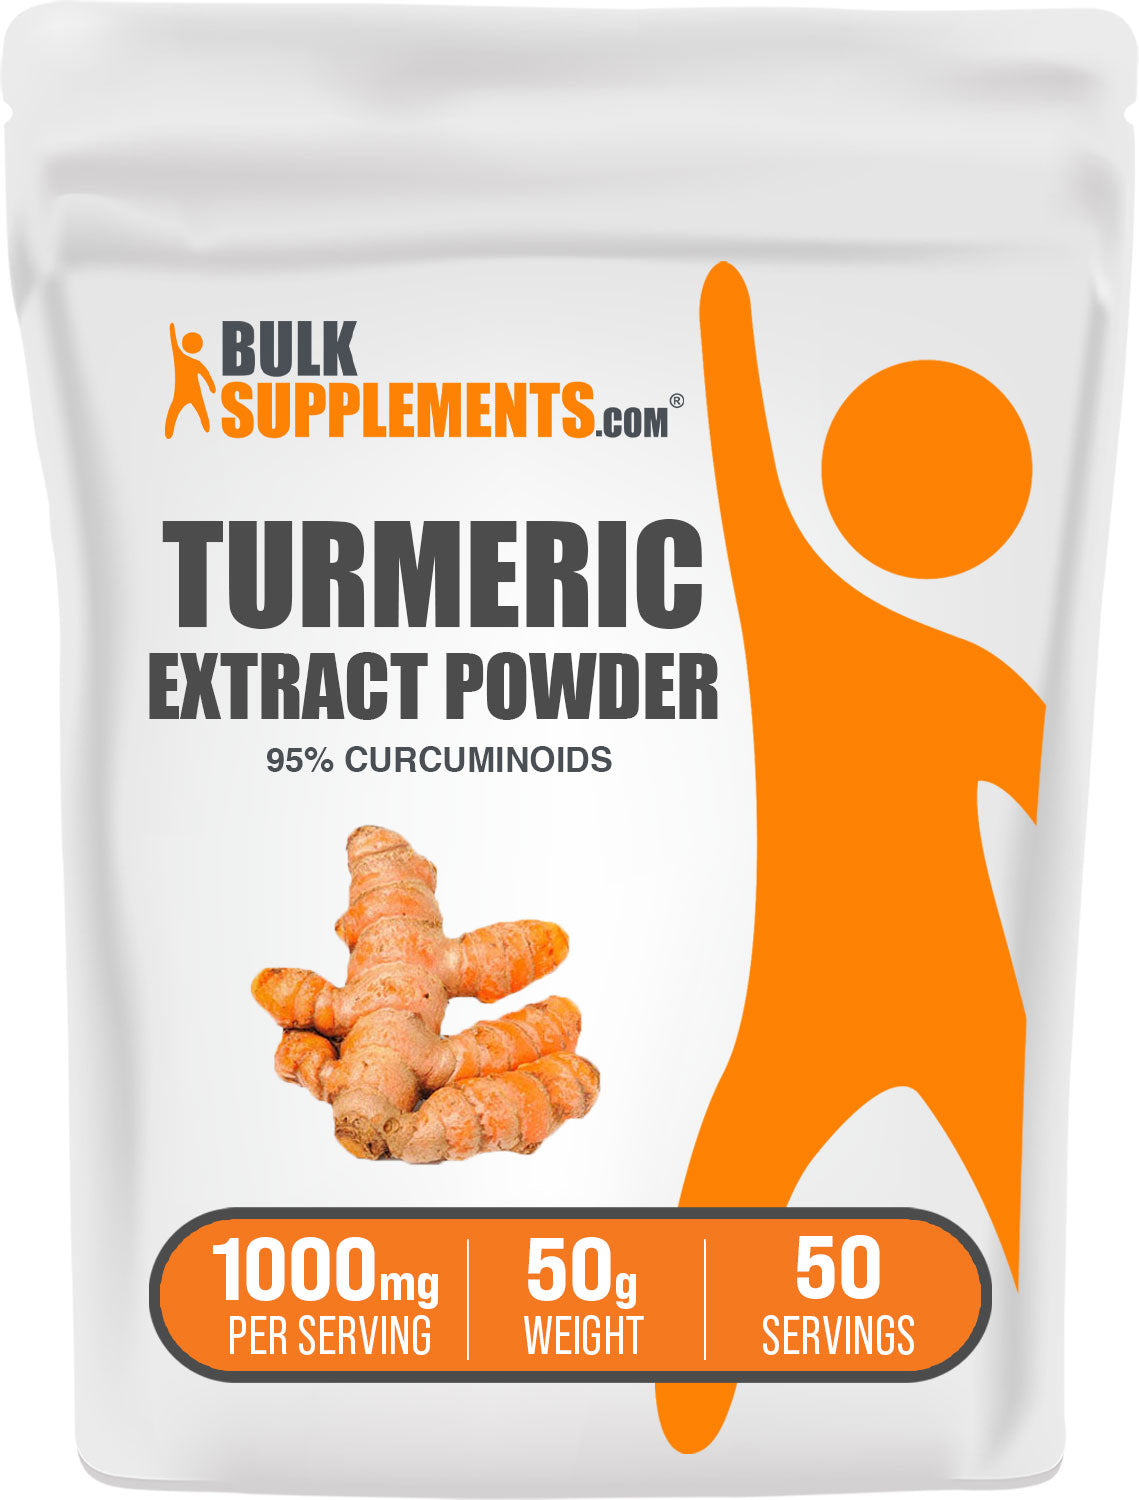 BulkSupplements Turmeric Extract Powder 95% Curcuminoids 50g bag